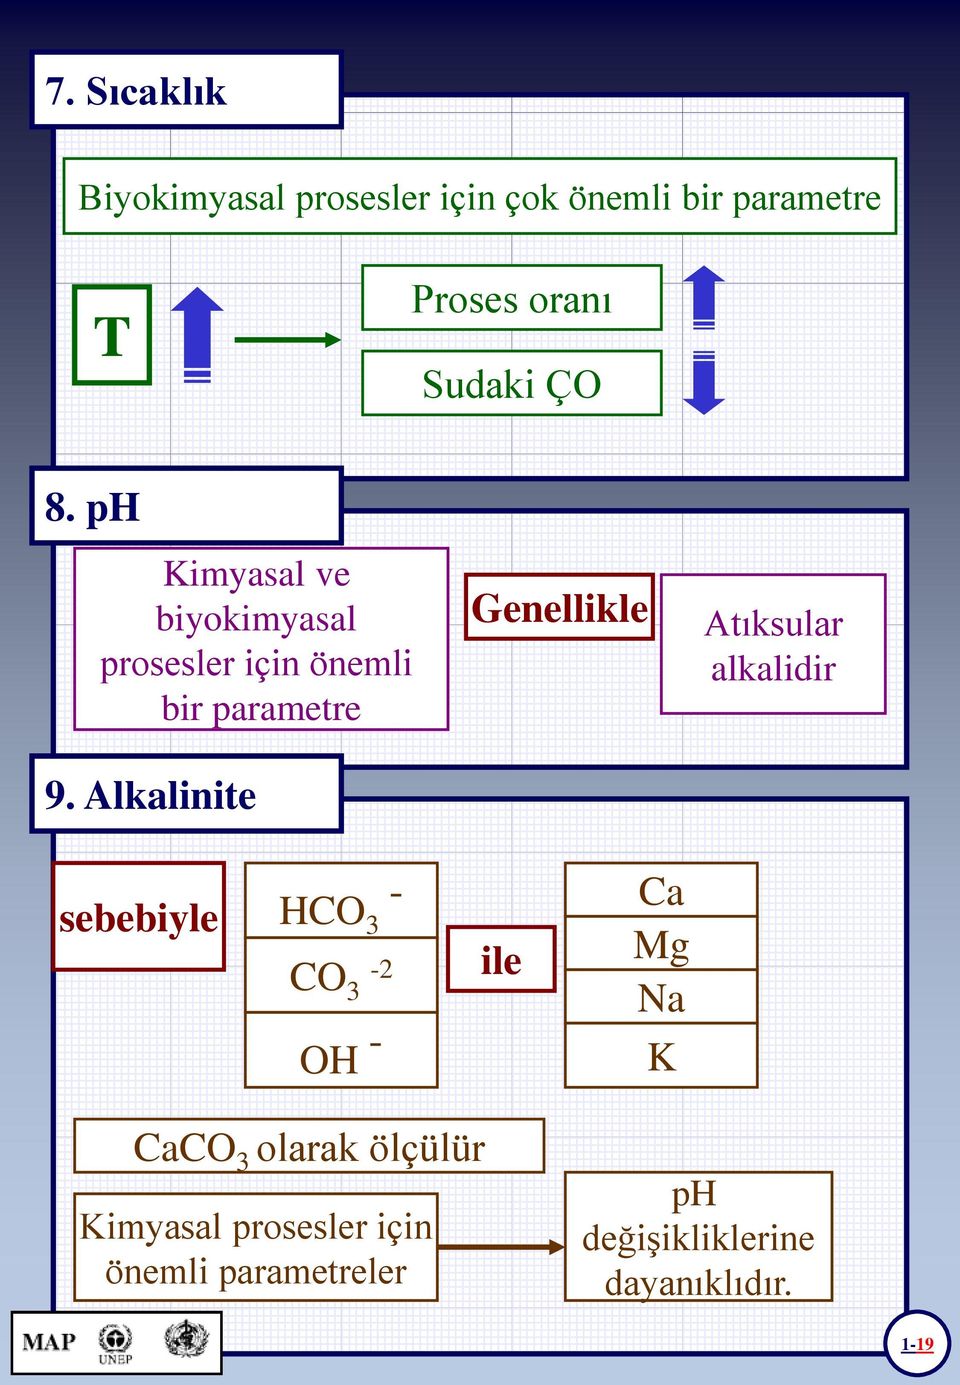 Alkalinite Genellikle Atıksular alkalidir sebebiyle HCO 3 - CO 3-2 OH - ile Ca Mg Na K